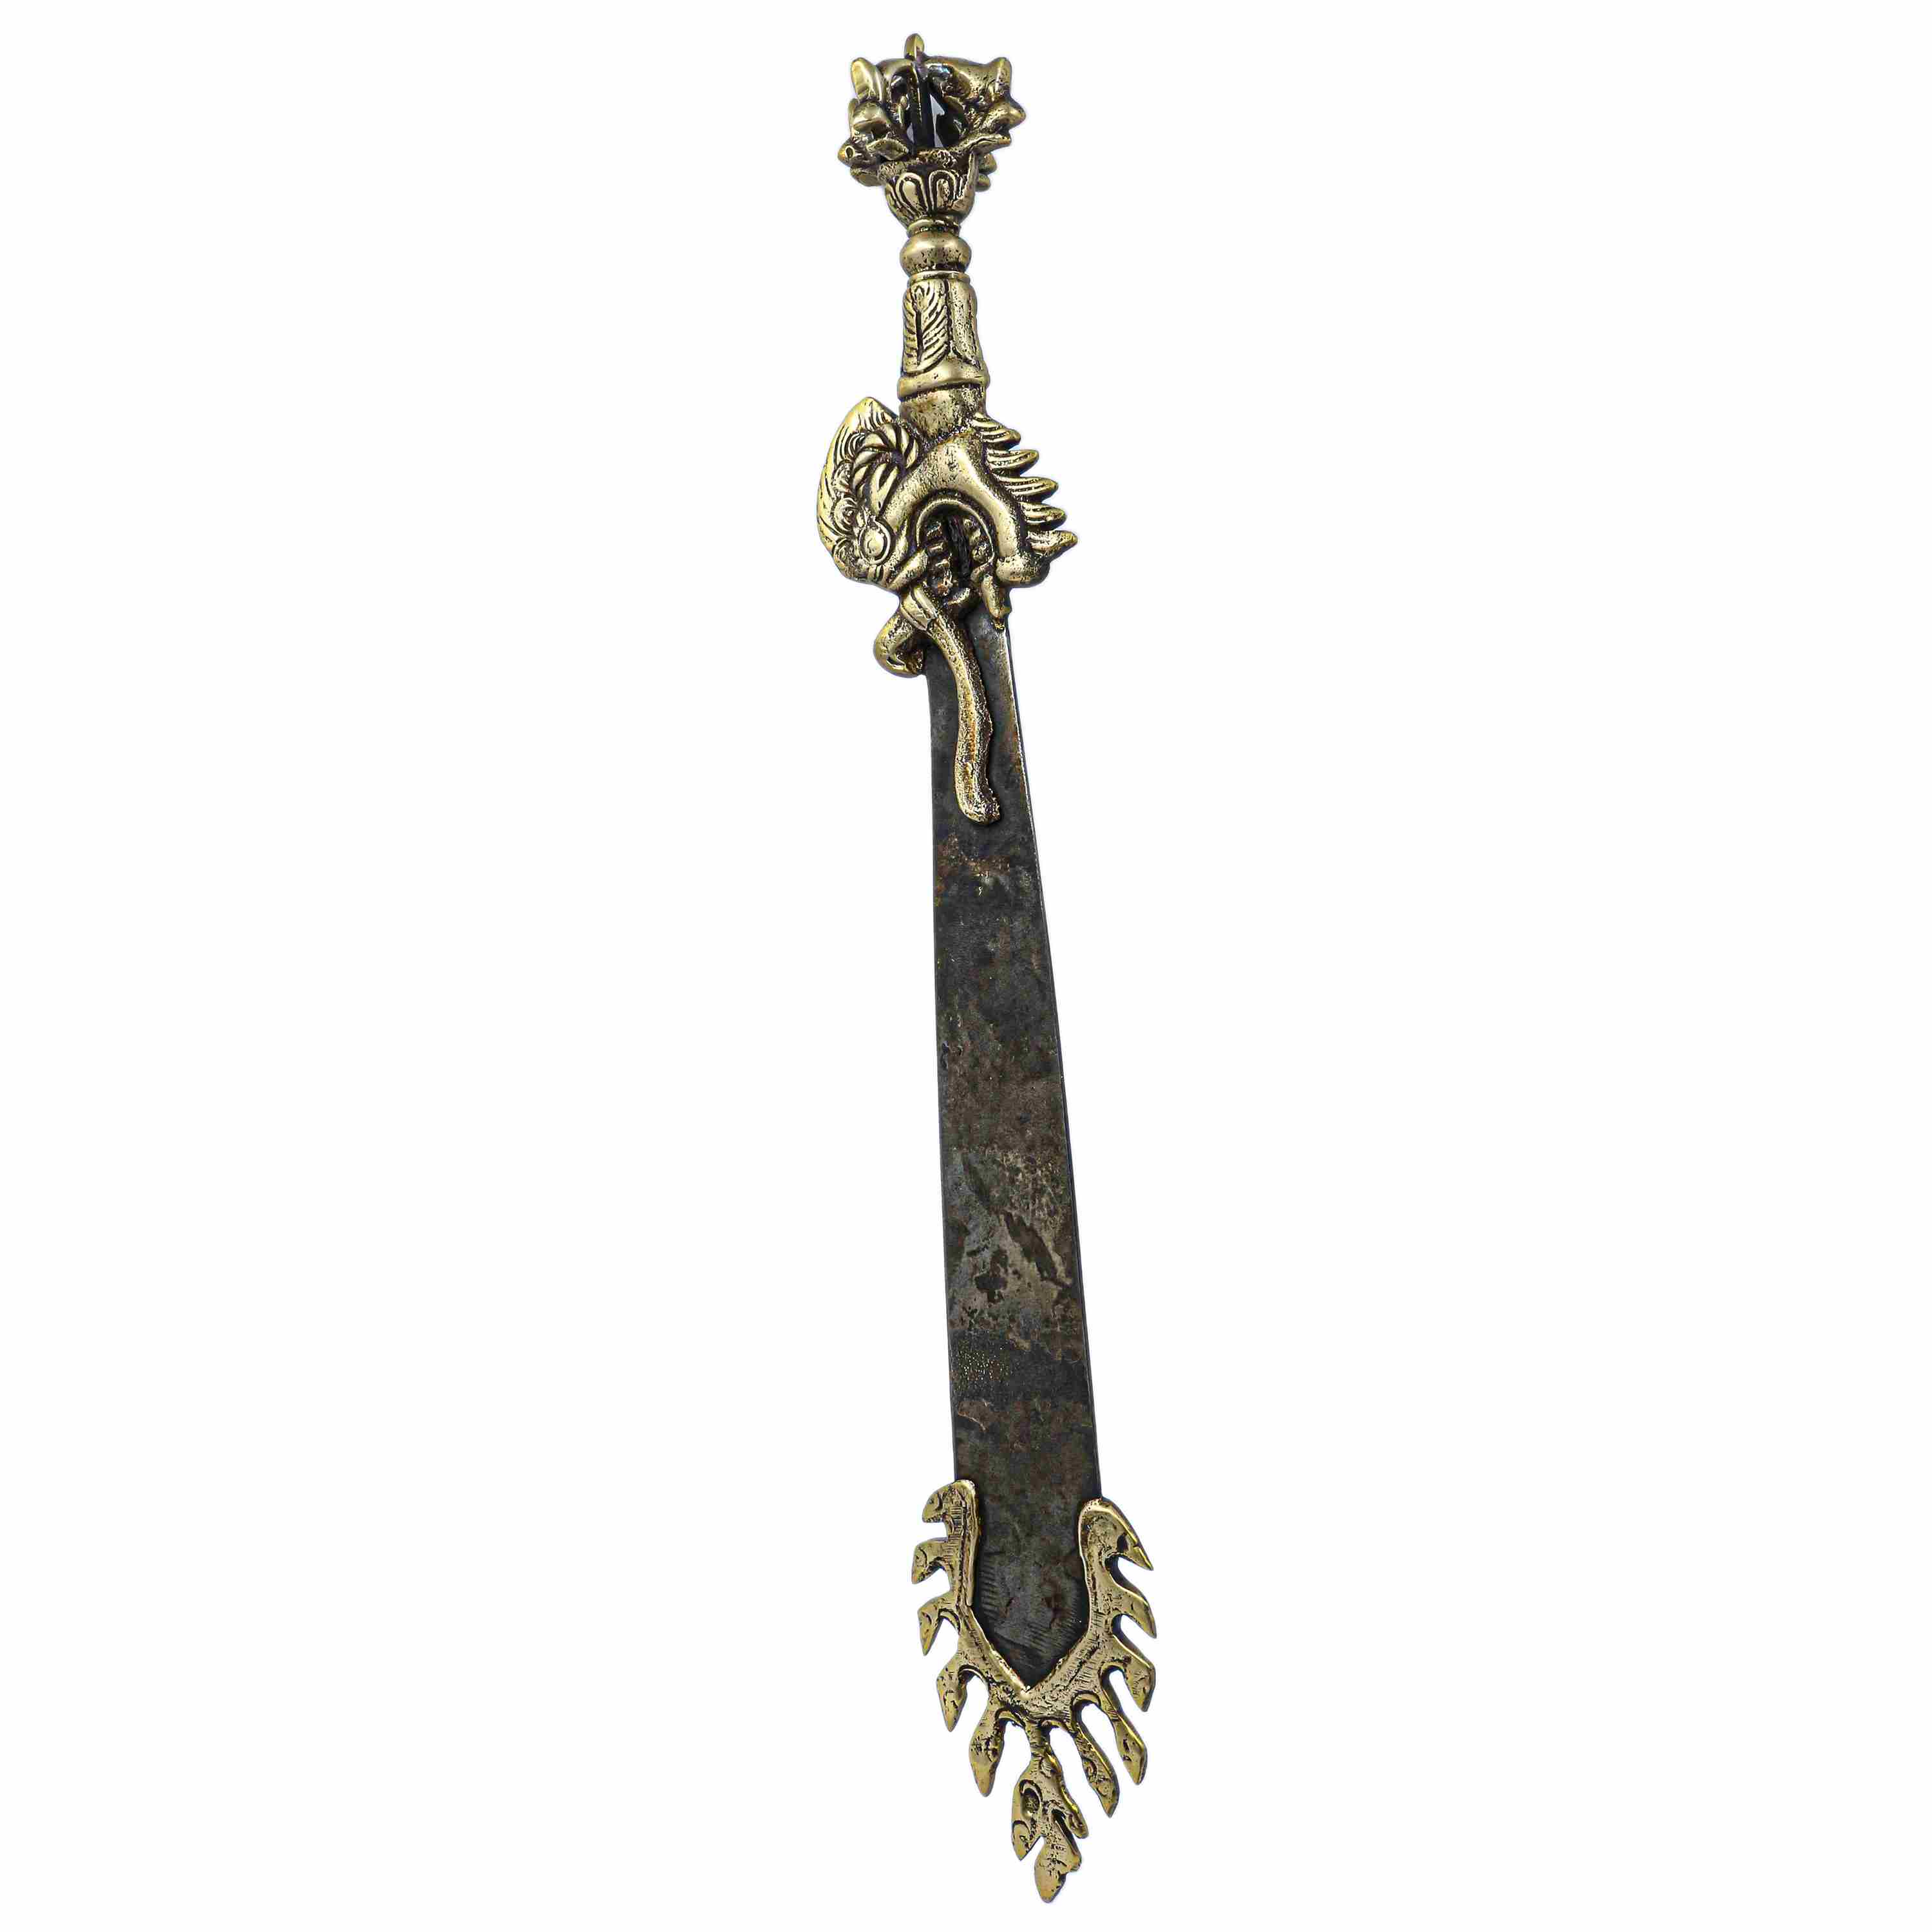 Sword Of Manjushri : Buddhist Ritual Item, iron And Brass